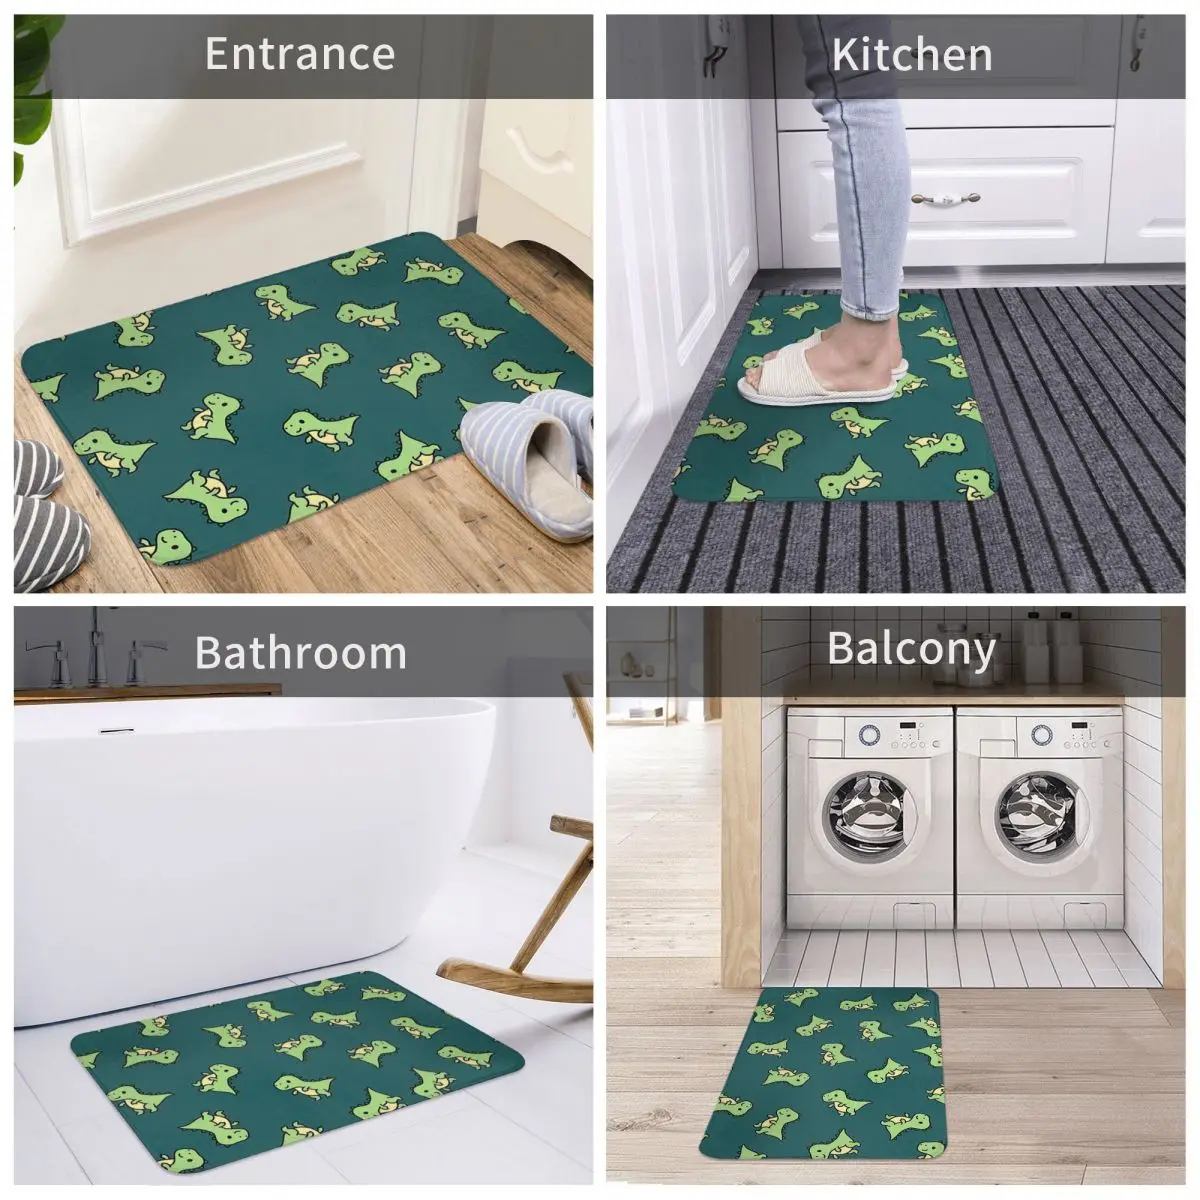 Chibi Mini Bathroom Mat Dinosaur Doormat Living Room Carpet Balcony Rug Home Decoration